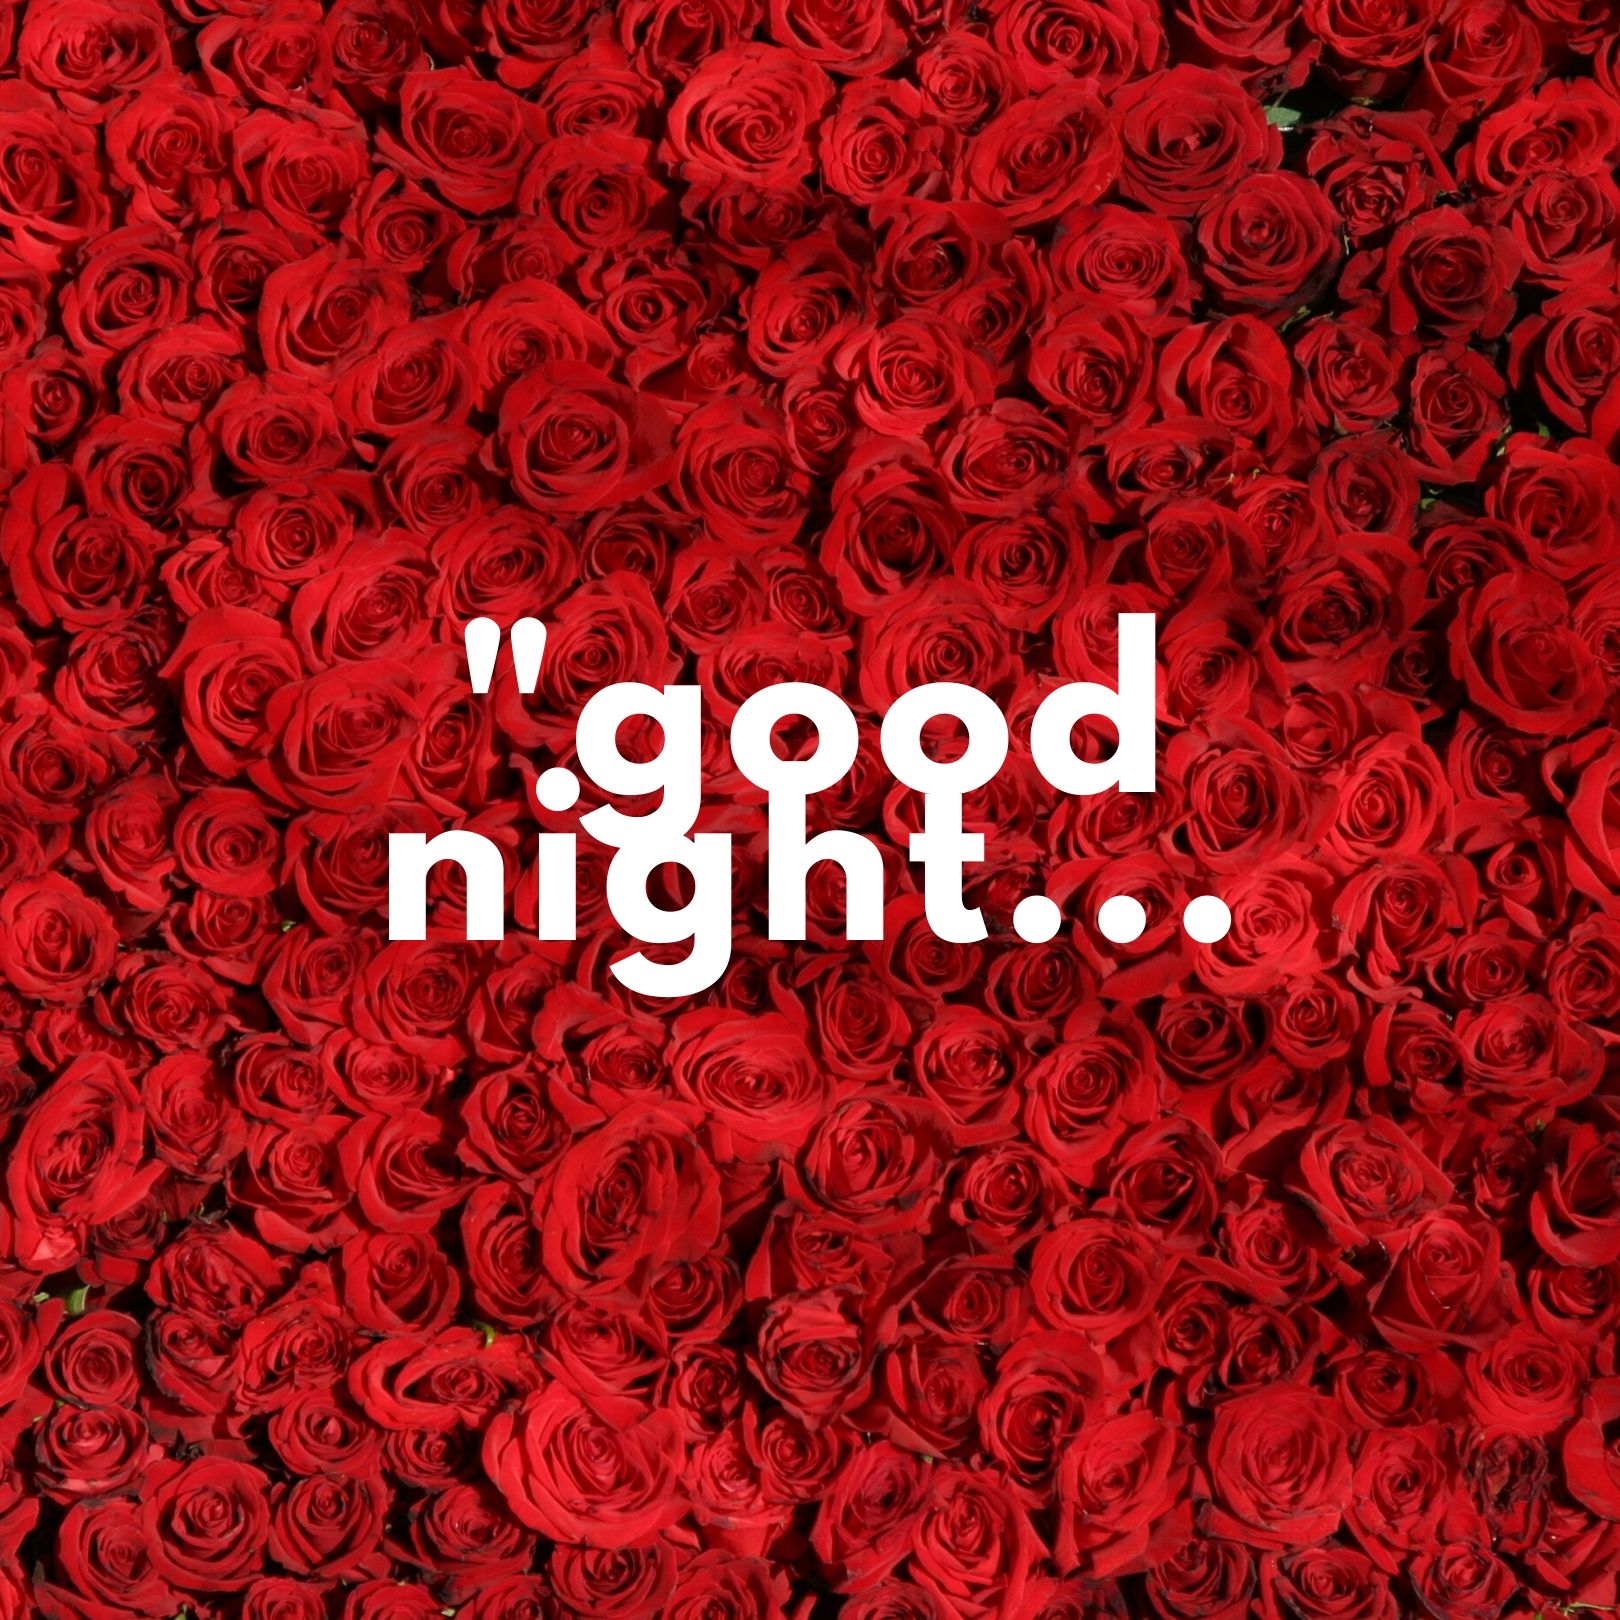 🔥 Good Night rose photo hd Download free - Images SRkh